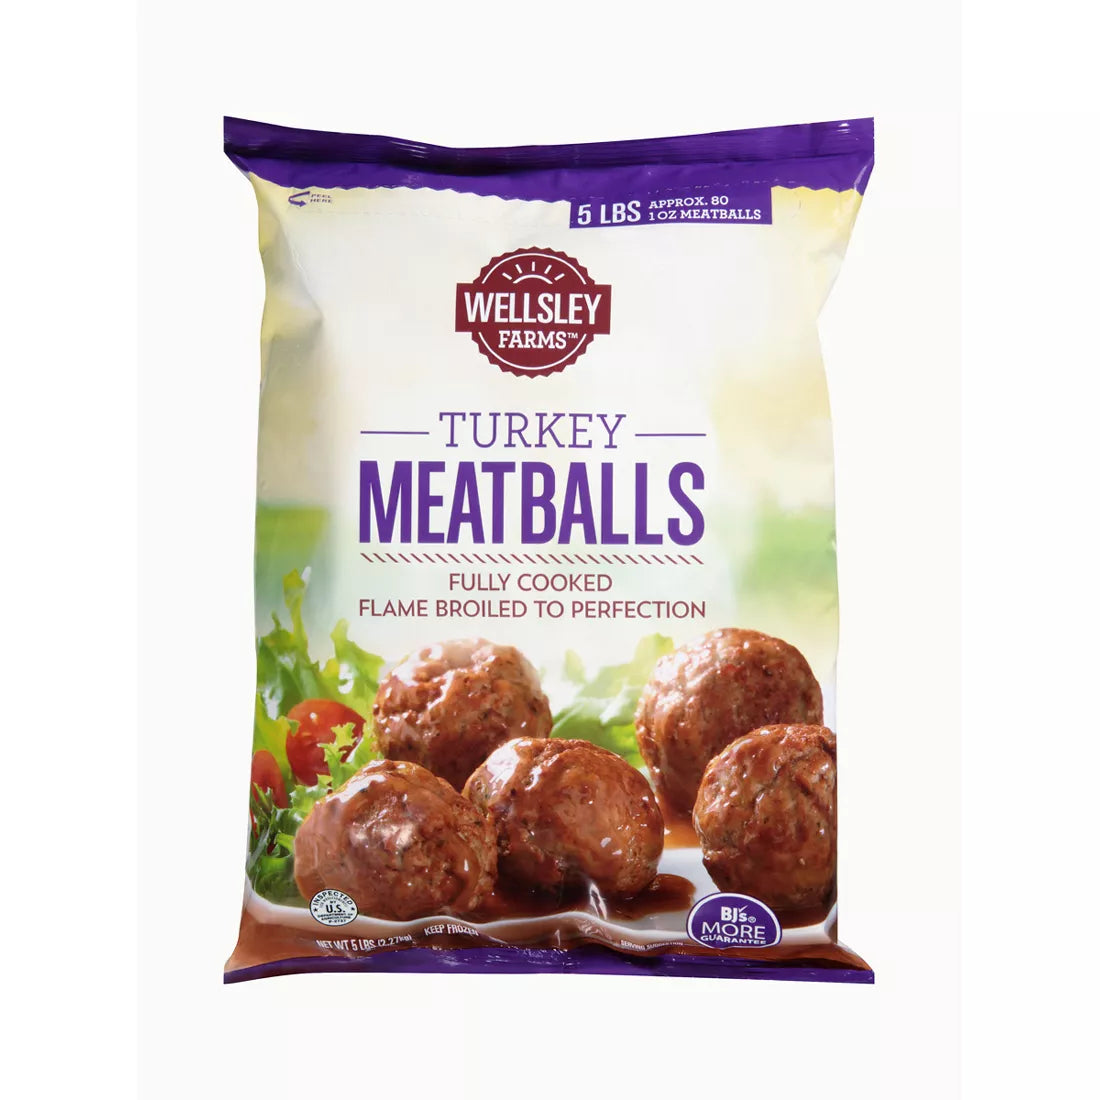 Wellsley Farms Turkey Meatballs, 5 lbs